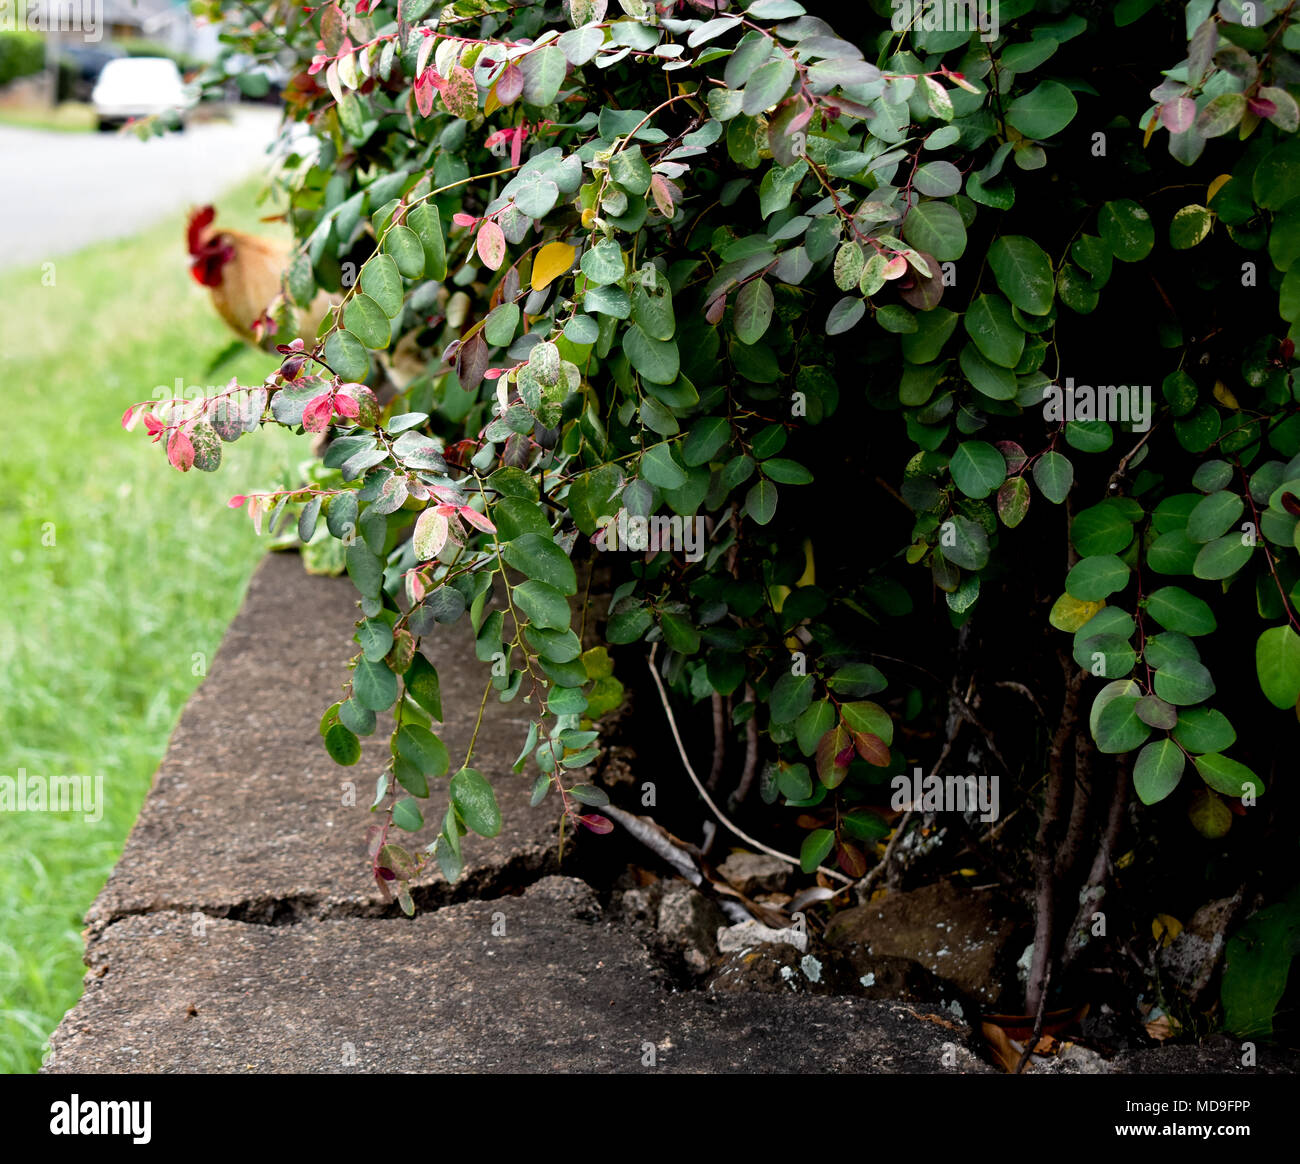 Leafy garden along a concrete wall with a shy chicken. Stock Photo